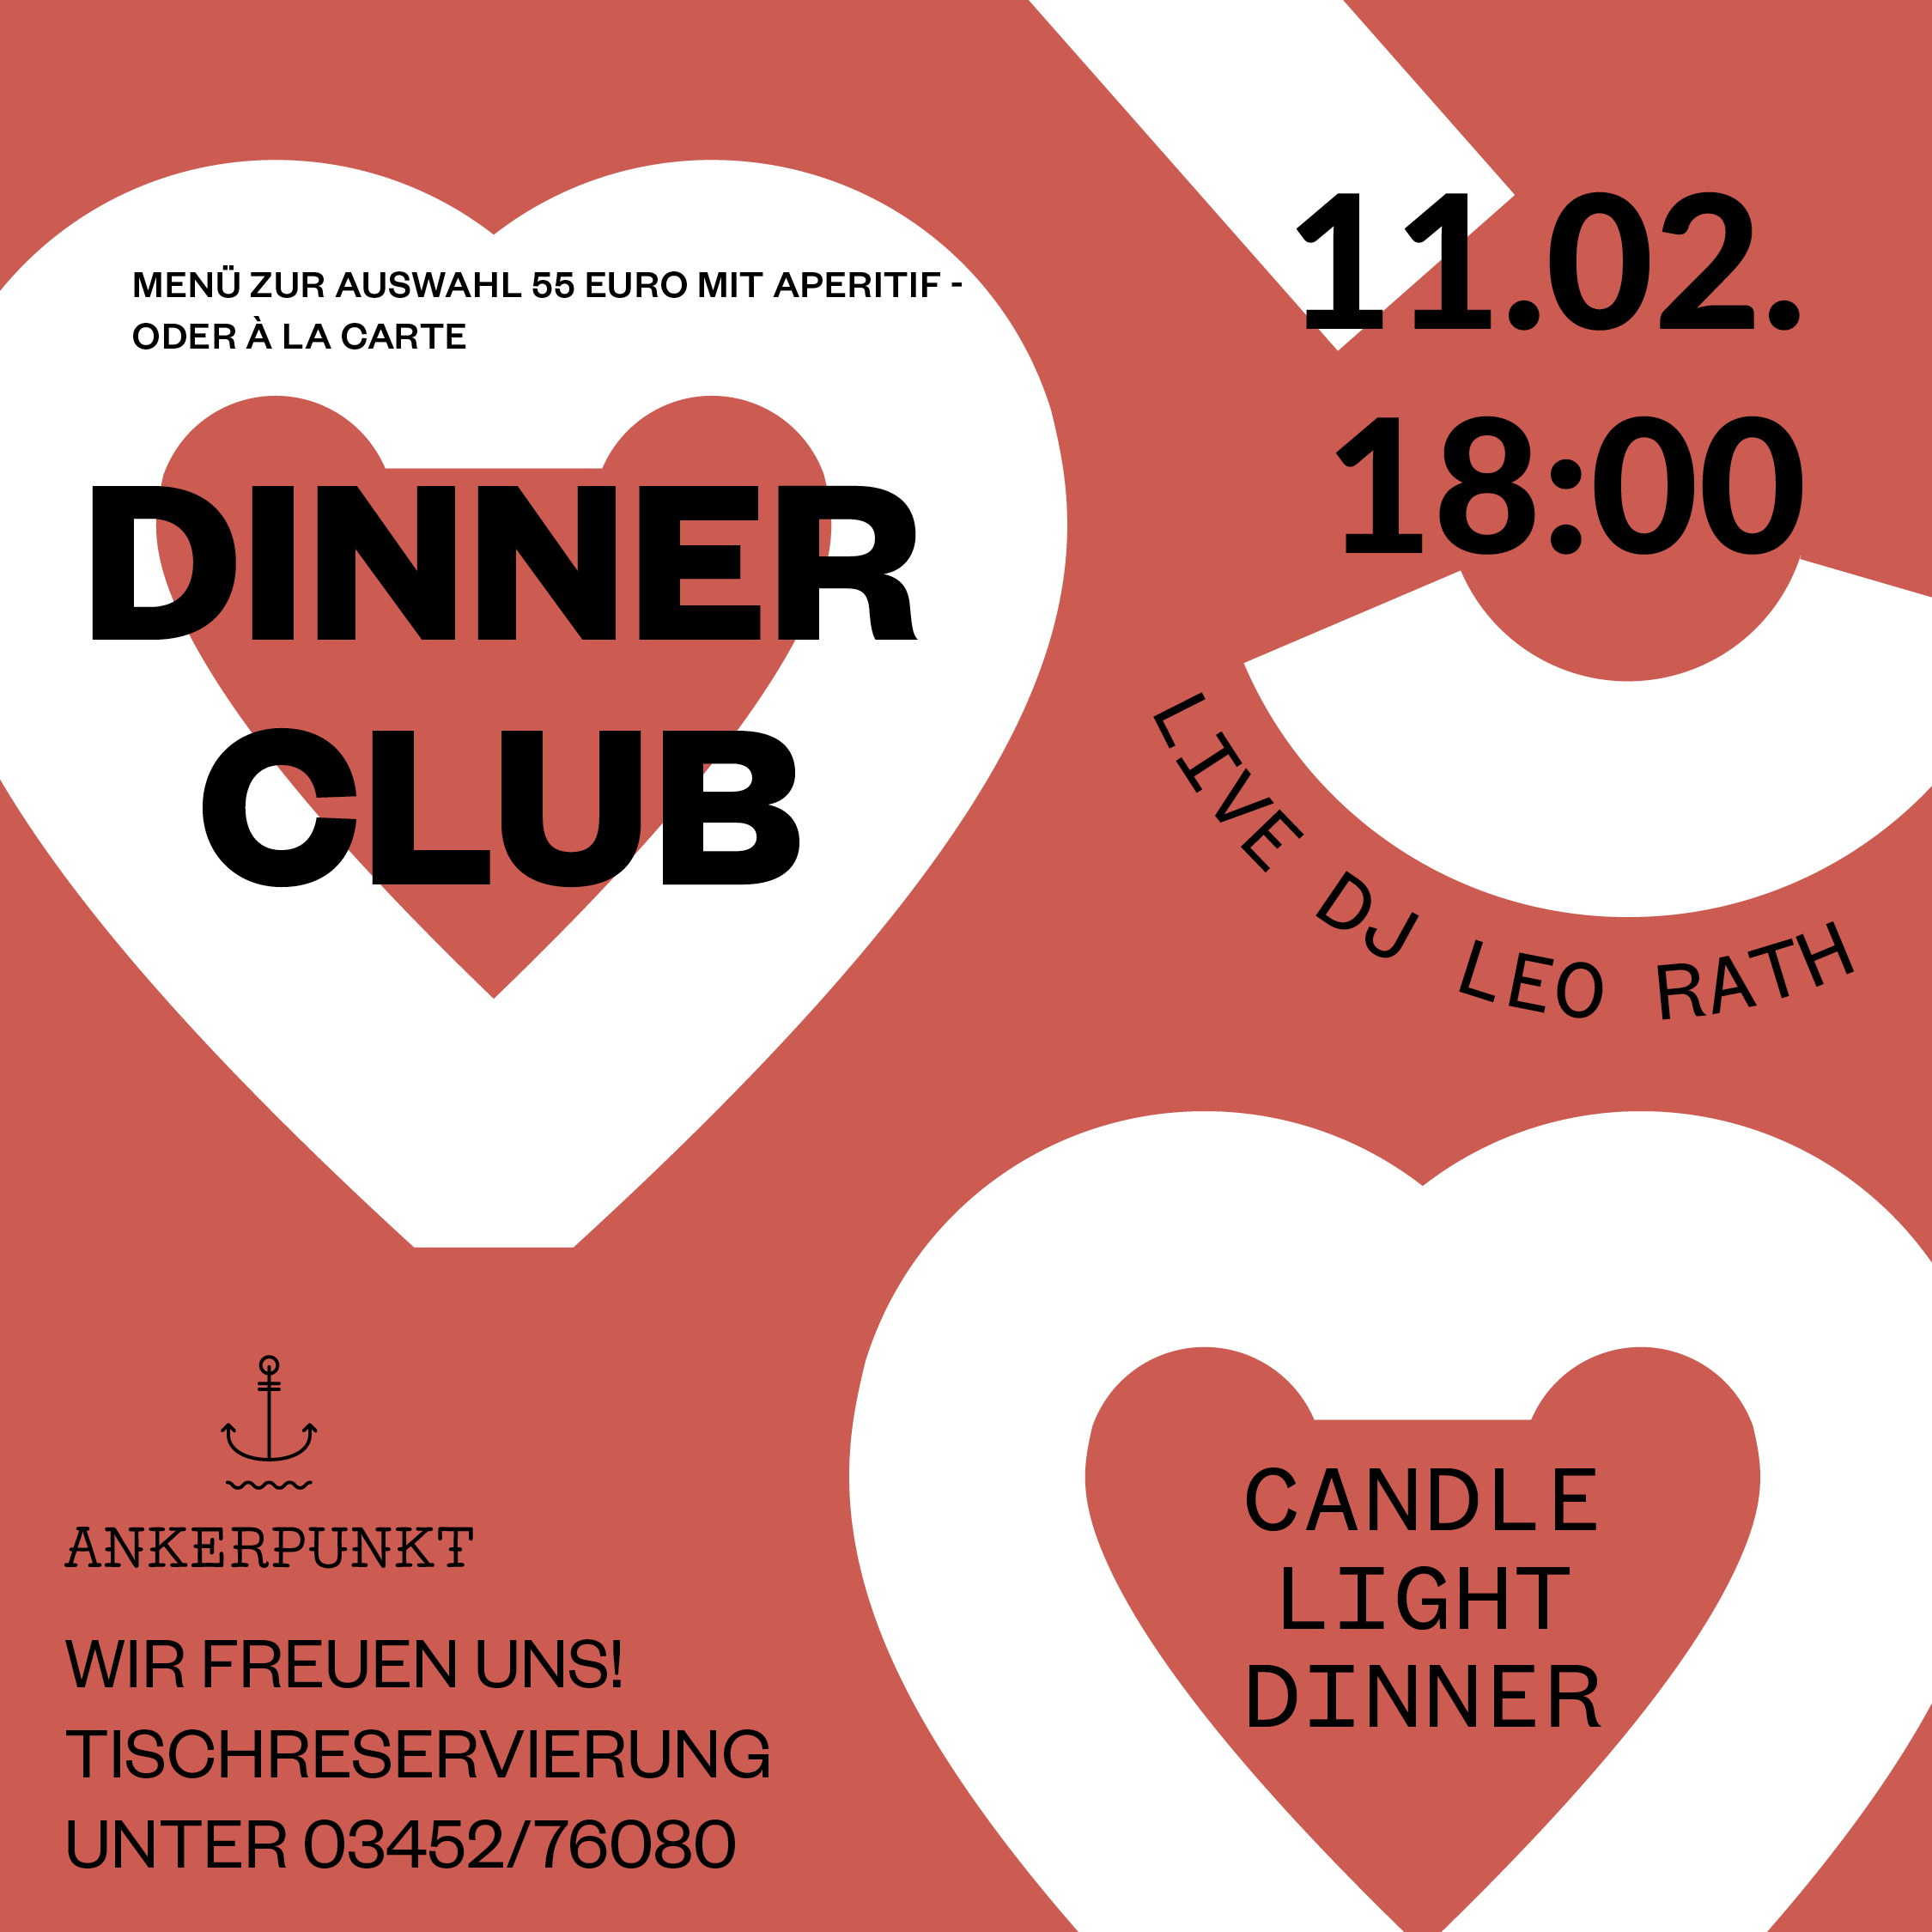 ANKERPUNKT_Dinner Club_CandleLighDinner